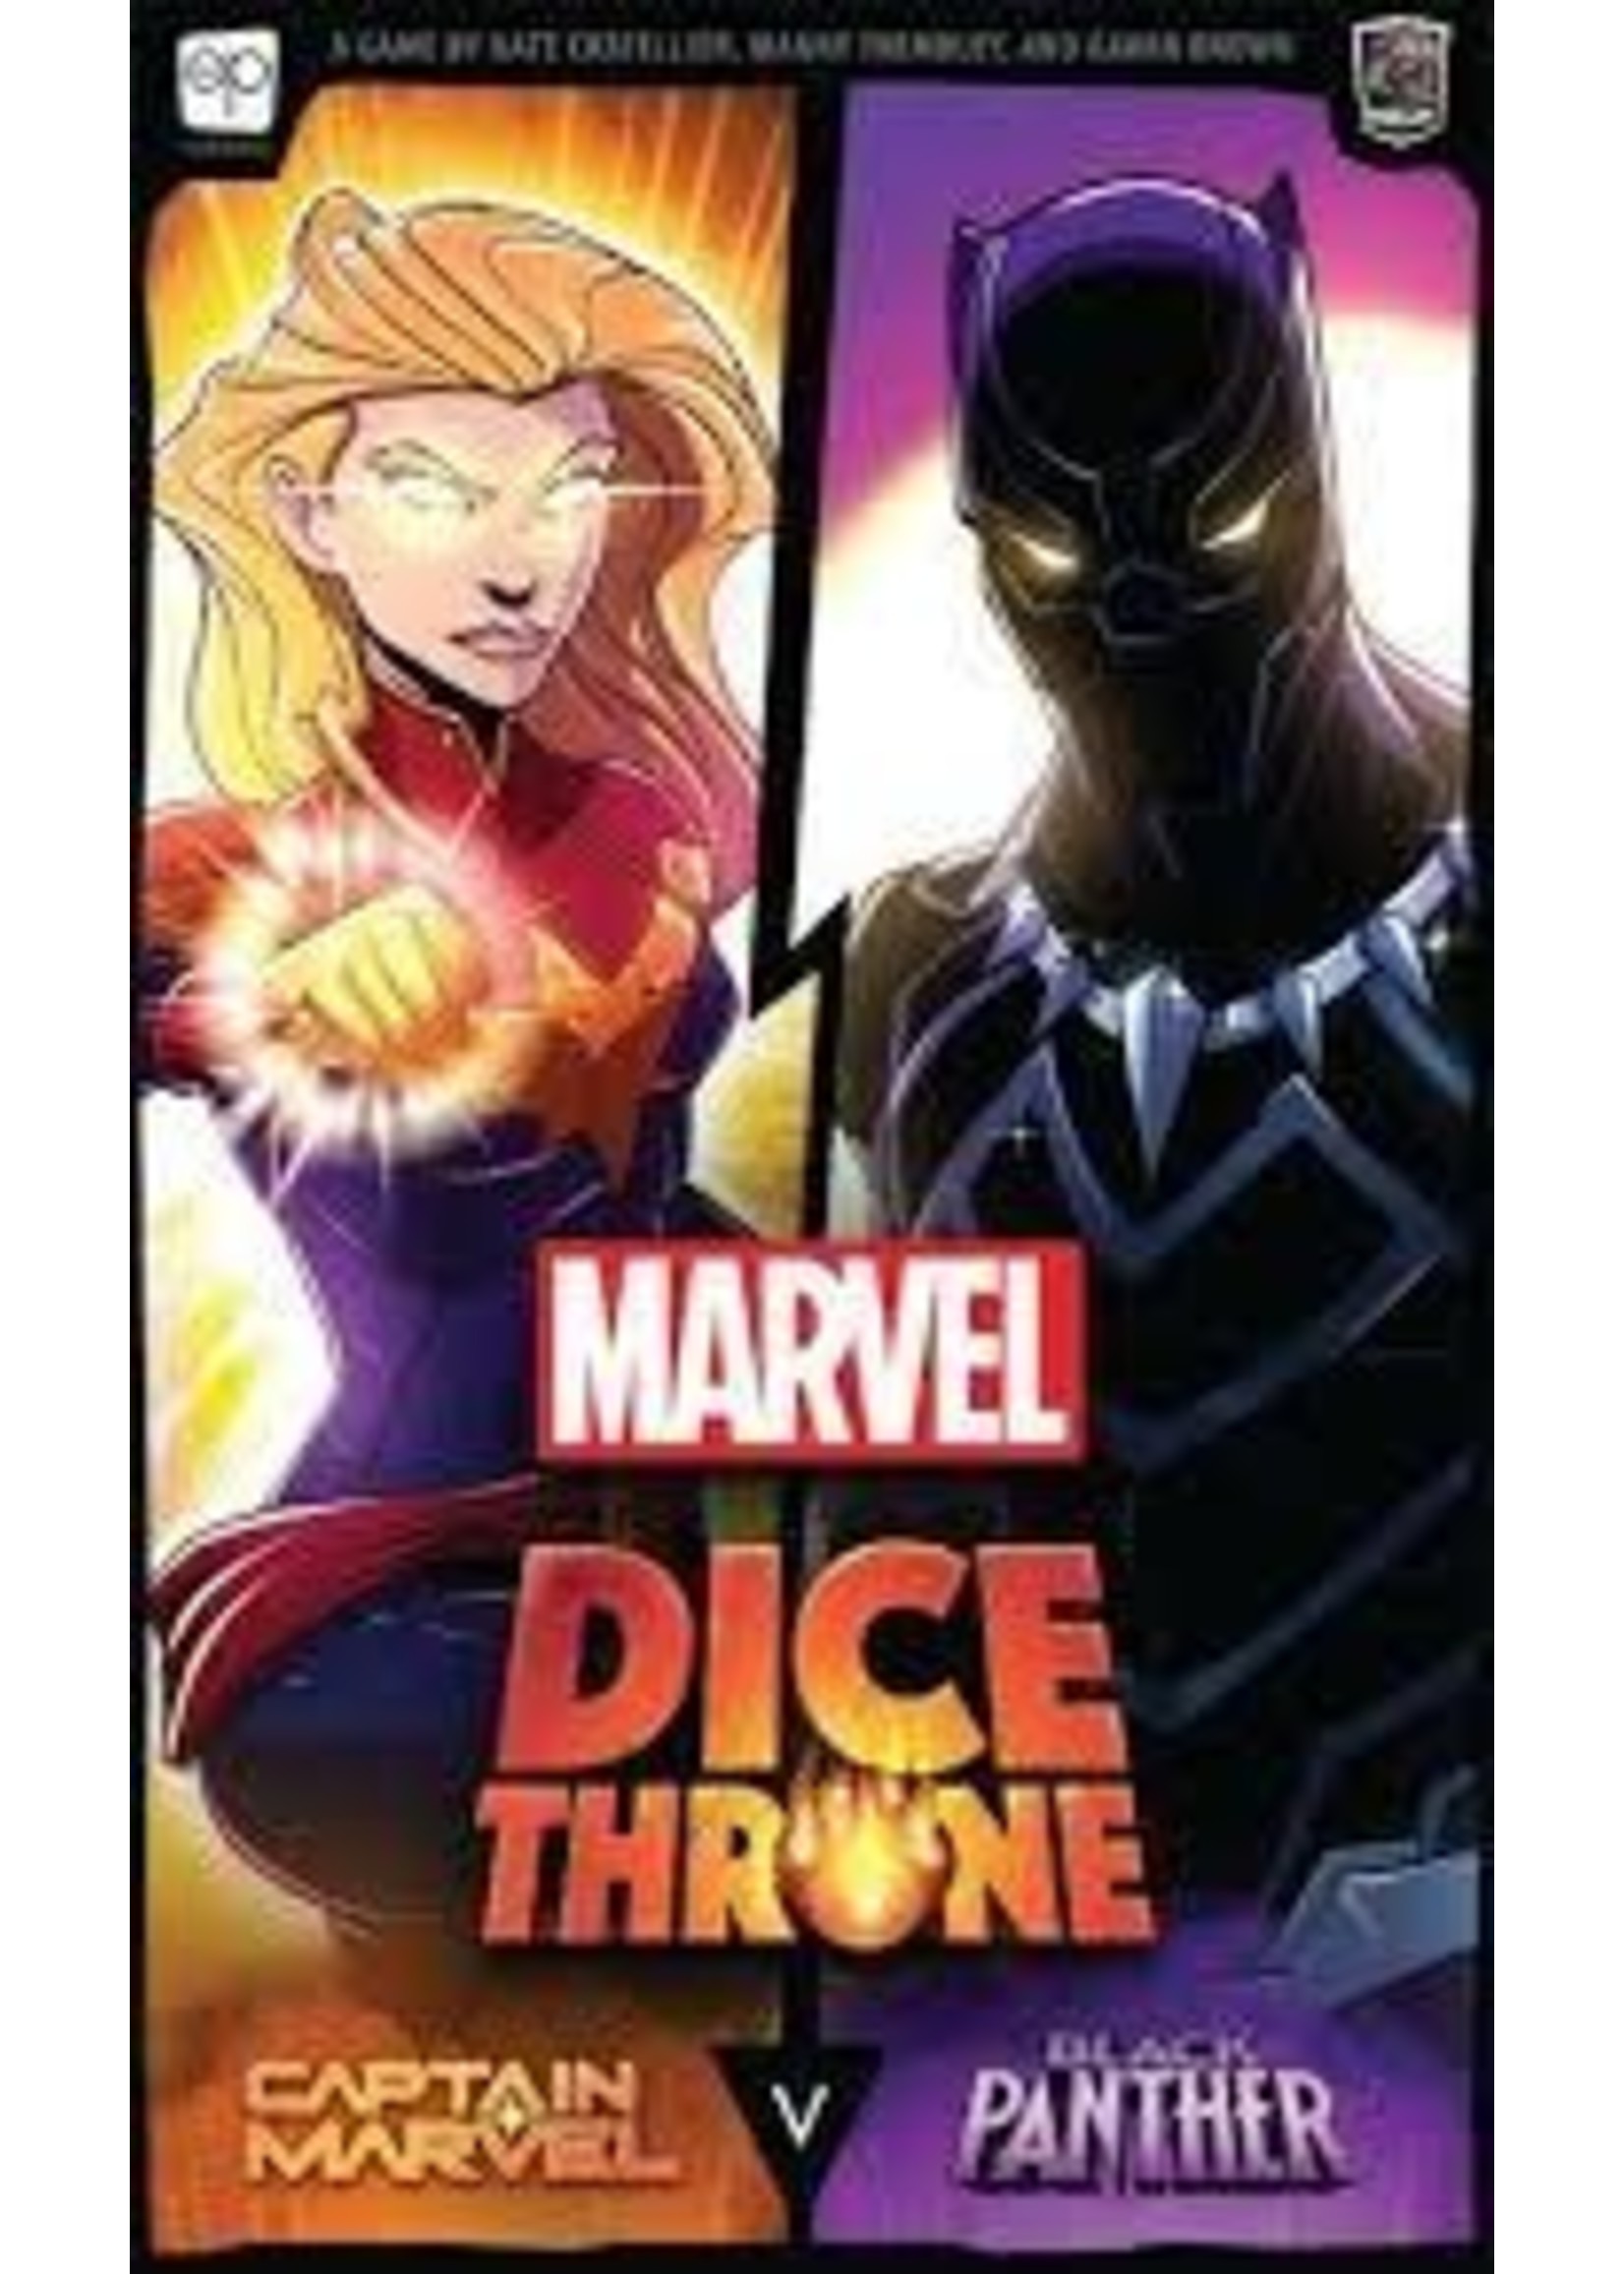 Marvel: Dice Throne 2-Hero Box (Captain Marvel vs Black Panther)